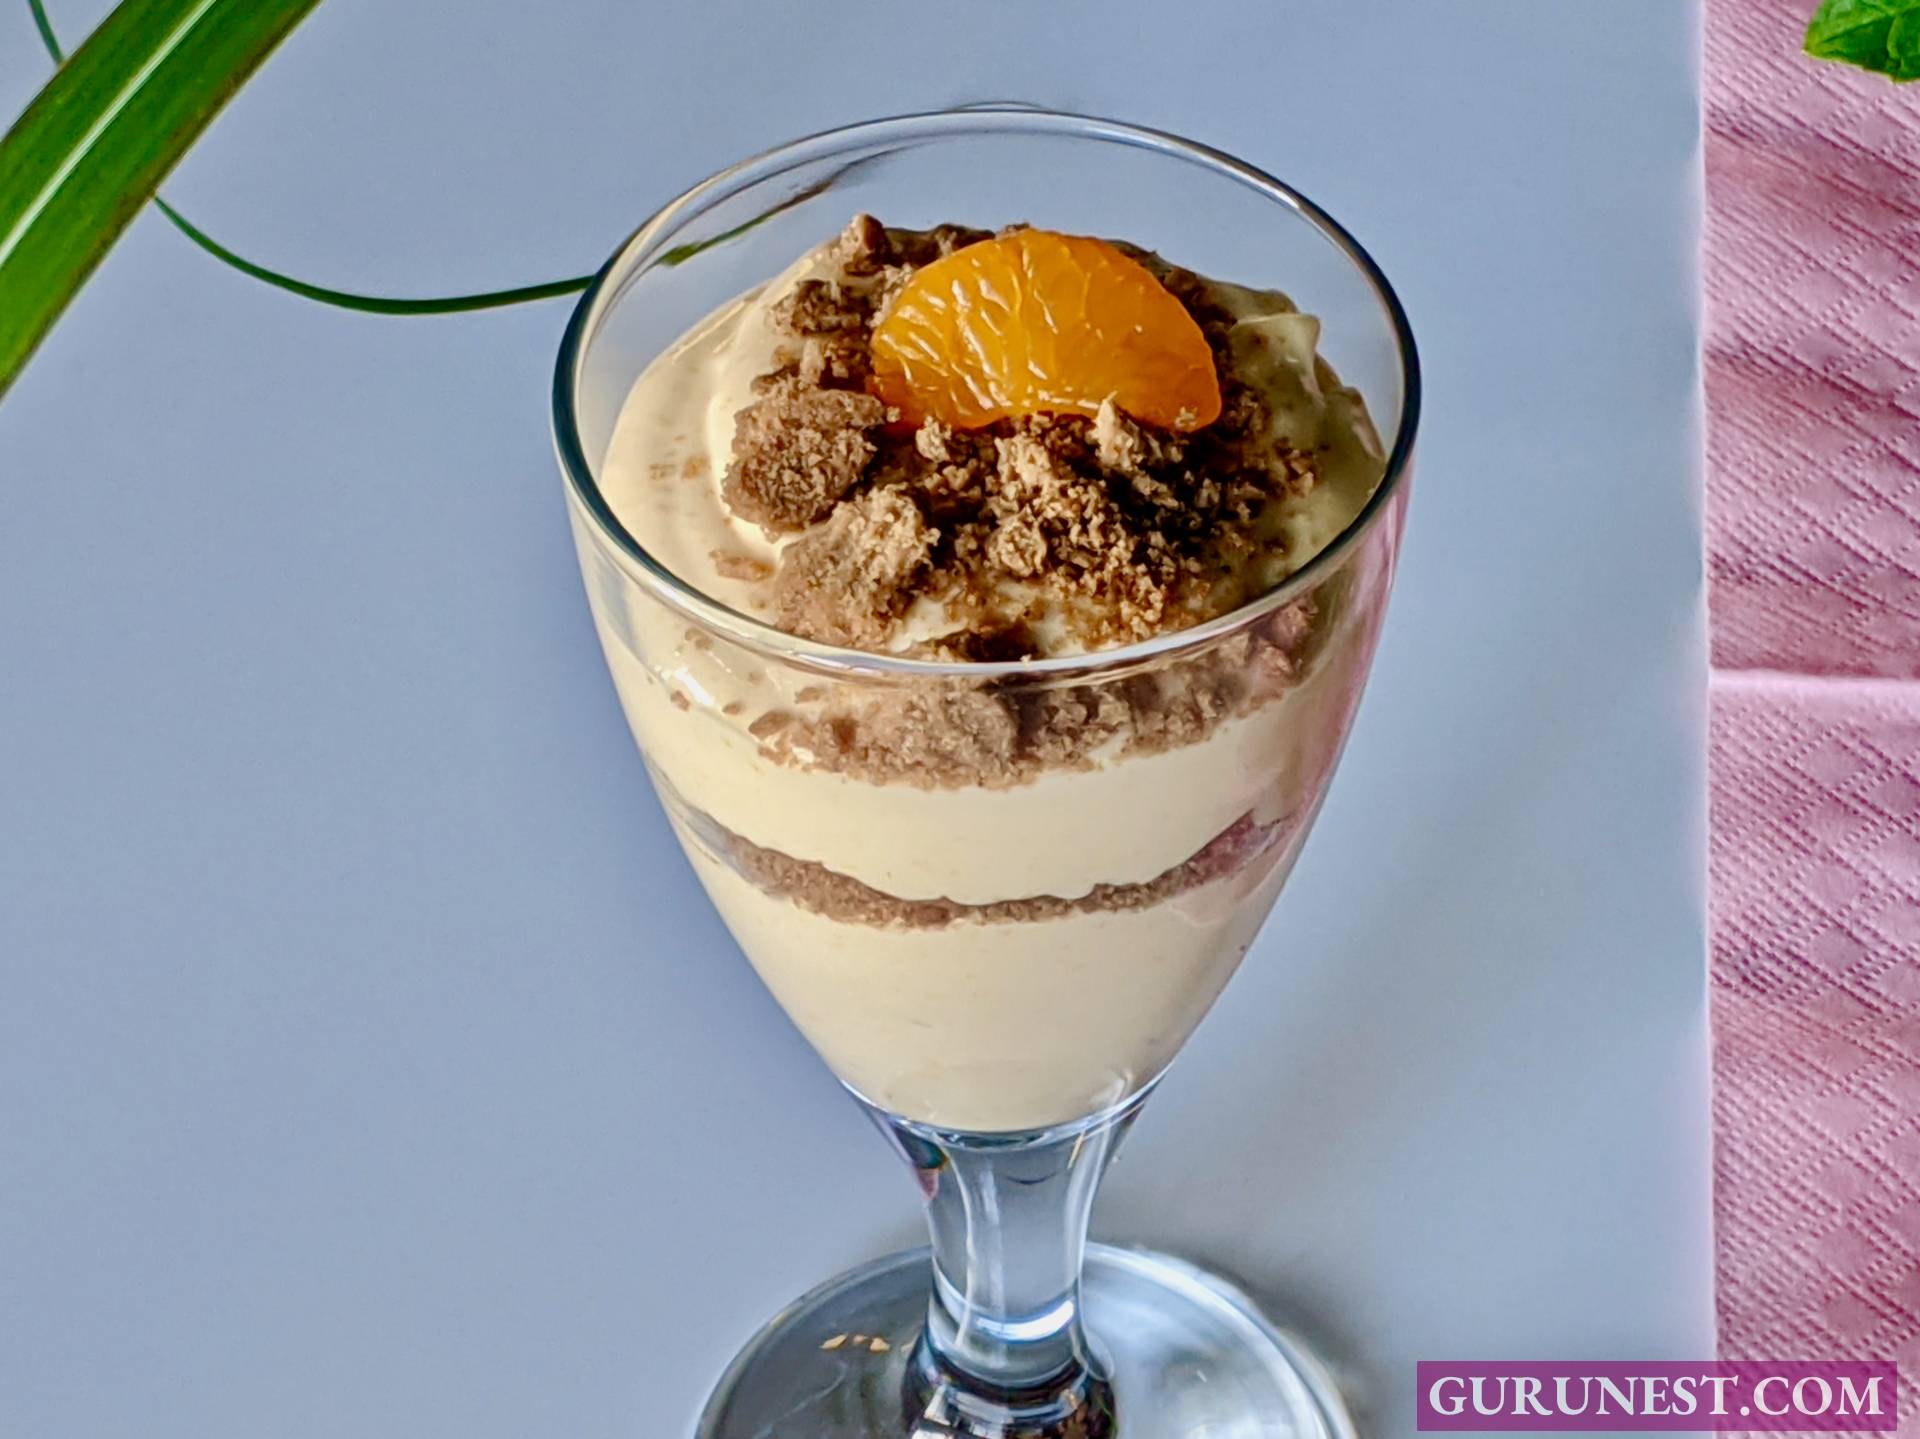 Quark-Mandarinen-Crème vegan à la gurunest - gurunest.com